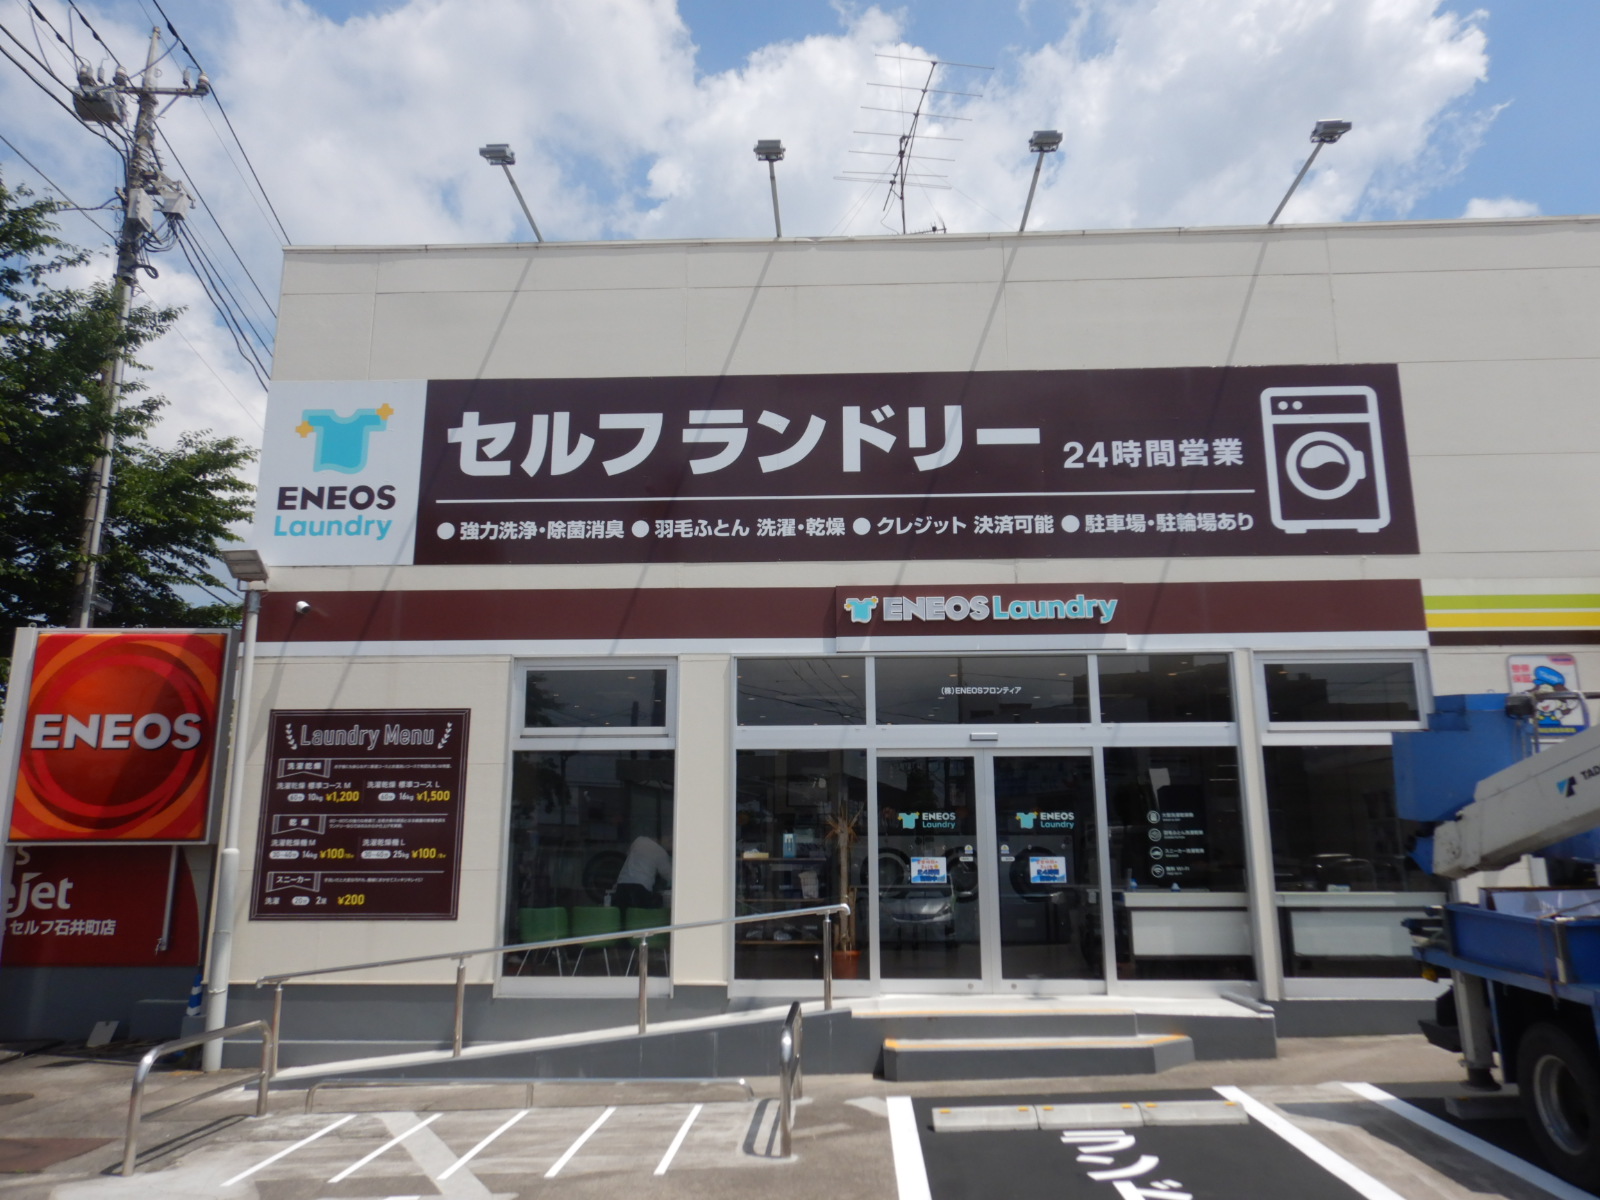 Images ENEOS Laundry 石井町店